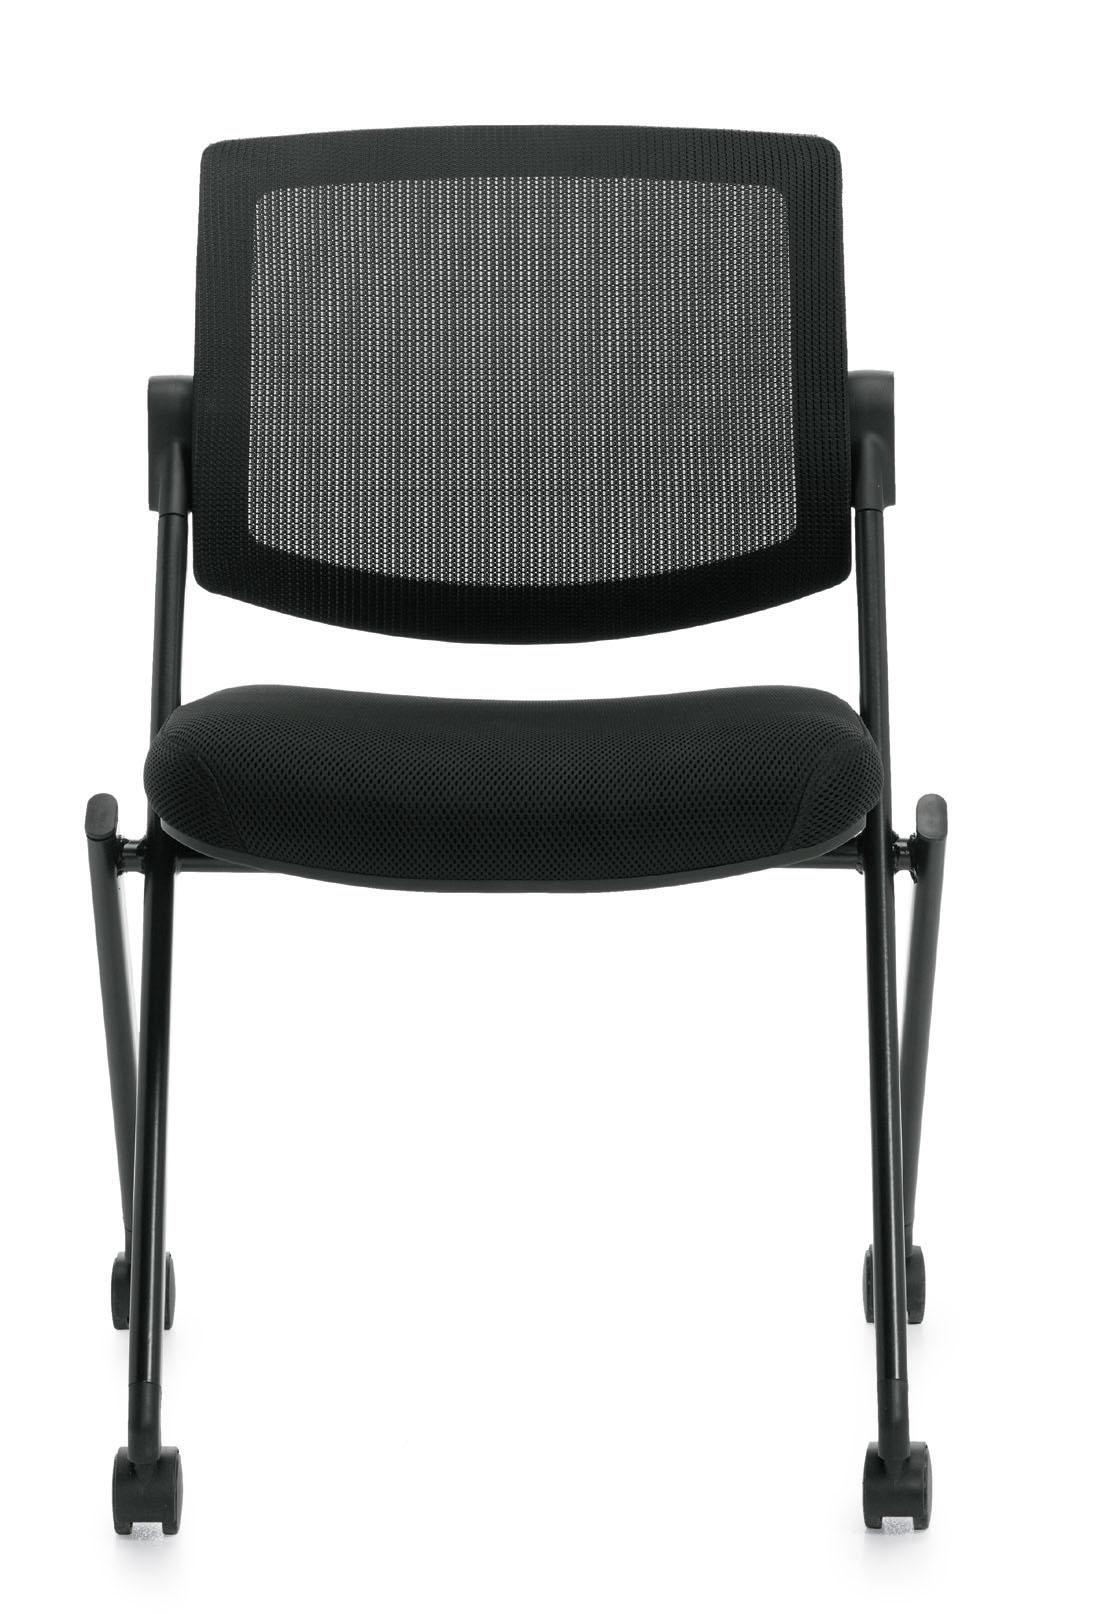 Offices To Go™ Mesh Back Flip Seat Nesting Chair, OTG11340B